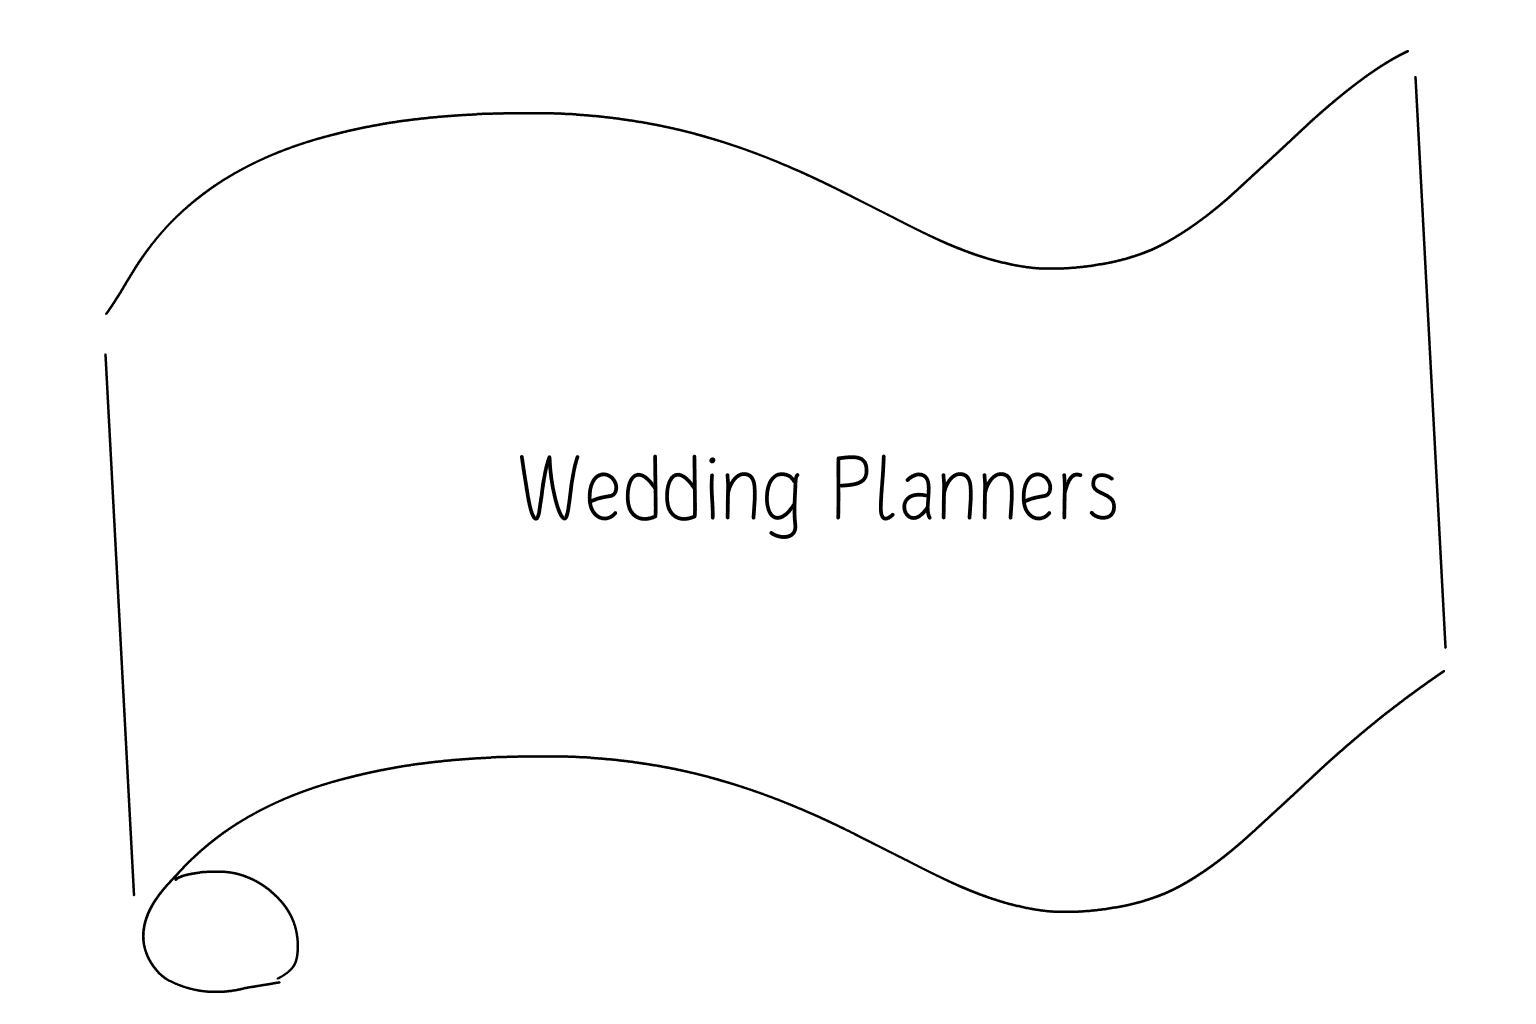 Illustration of Wedding Planners